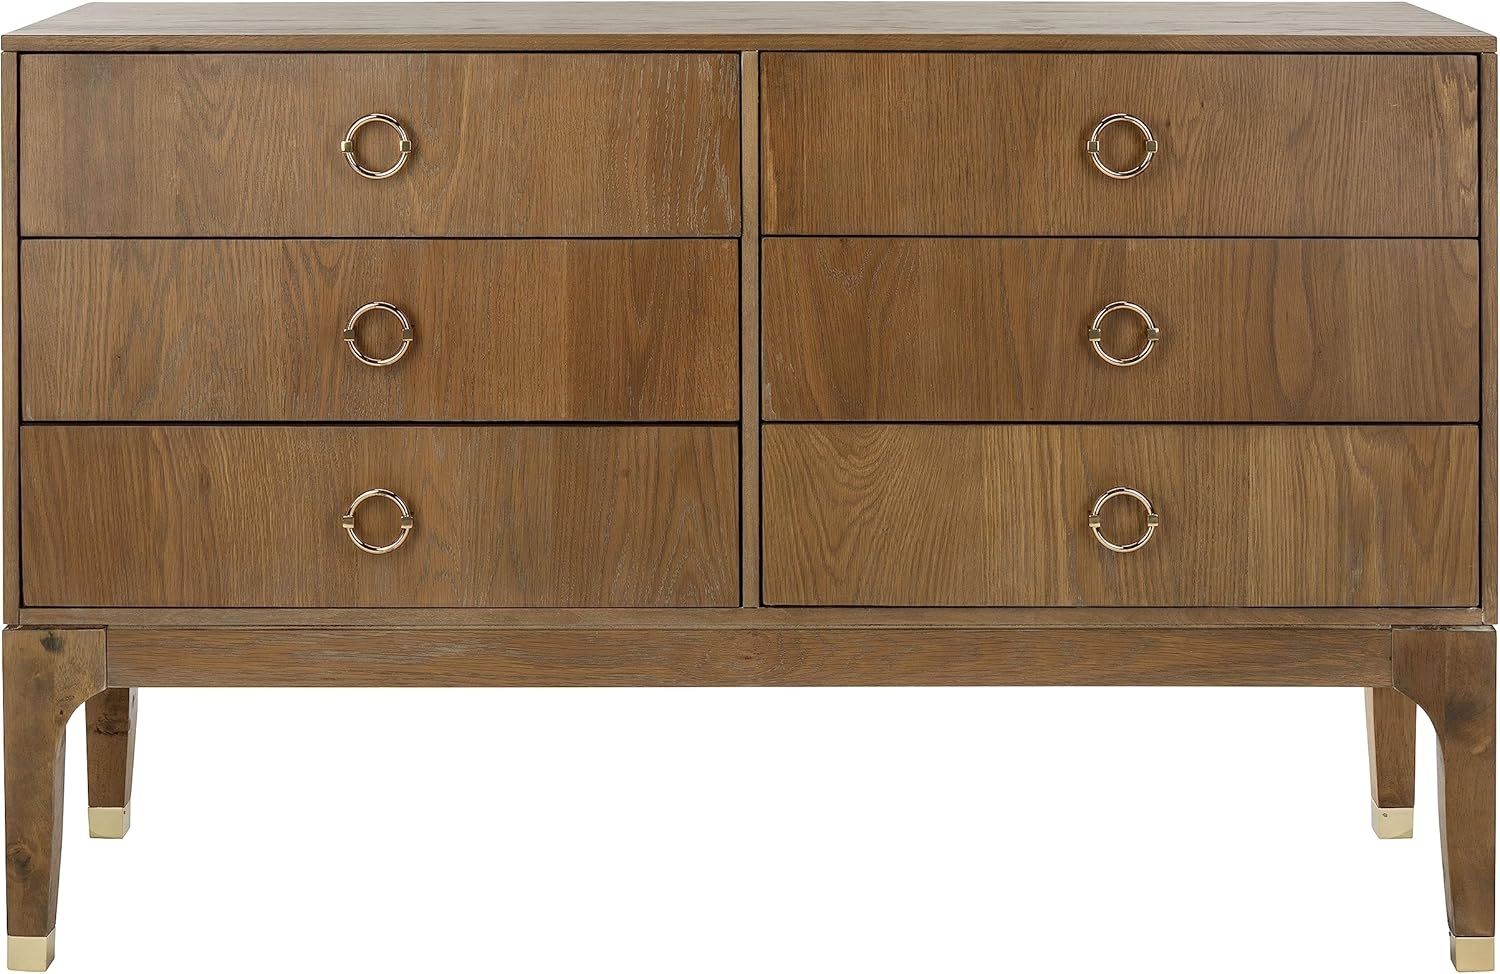 Safavieh Couture Home Lorna Rustic Oak 6-drawer Dresser | Amazon (US)